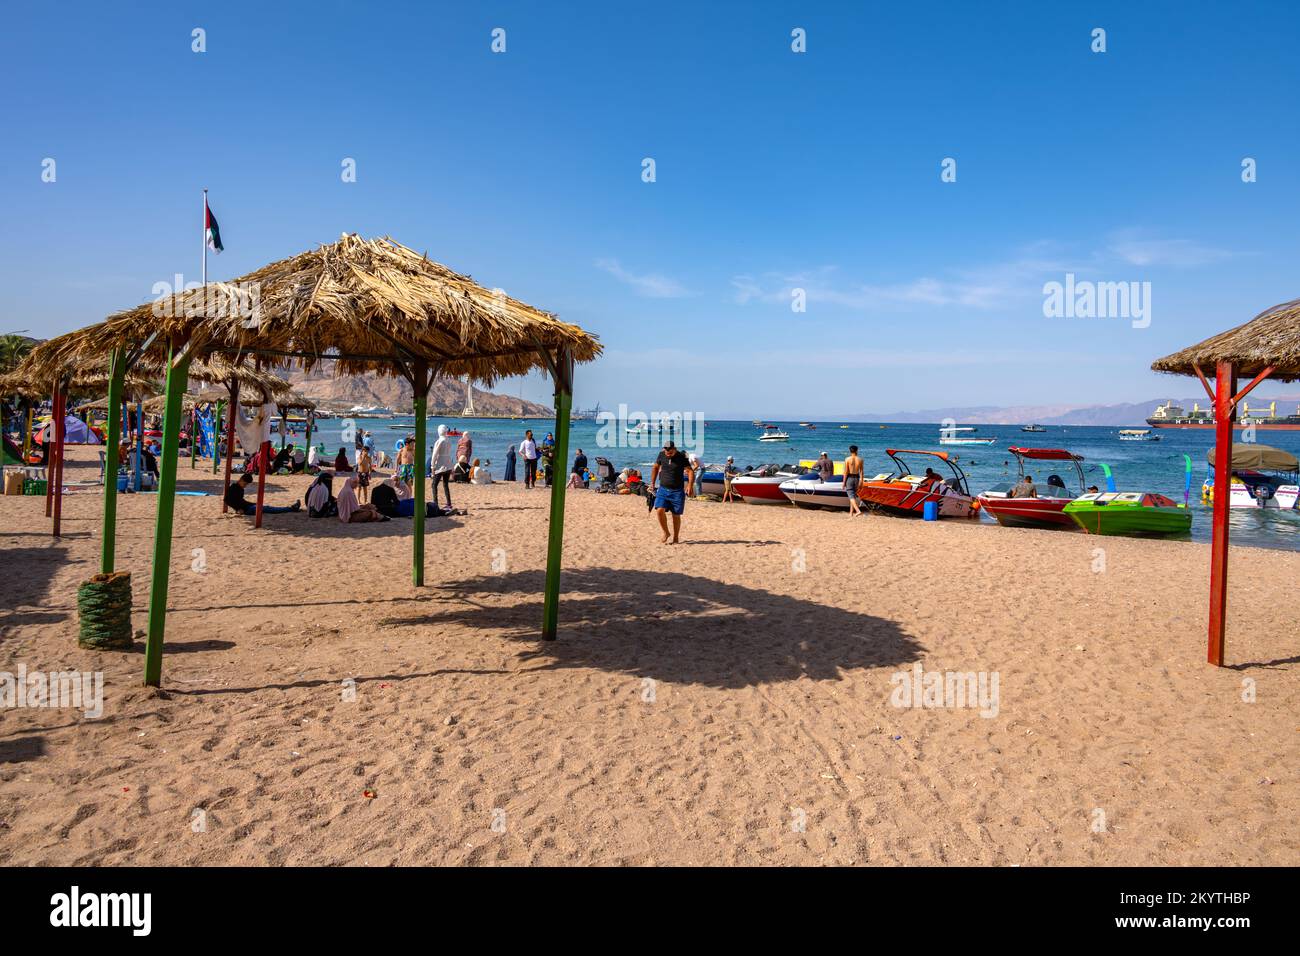 Al-Ghandour Beach in Aqaba Jordan looking towards the hills of Isreal and Egypt Stock Photo